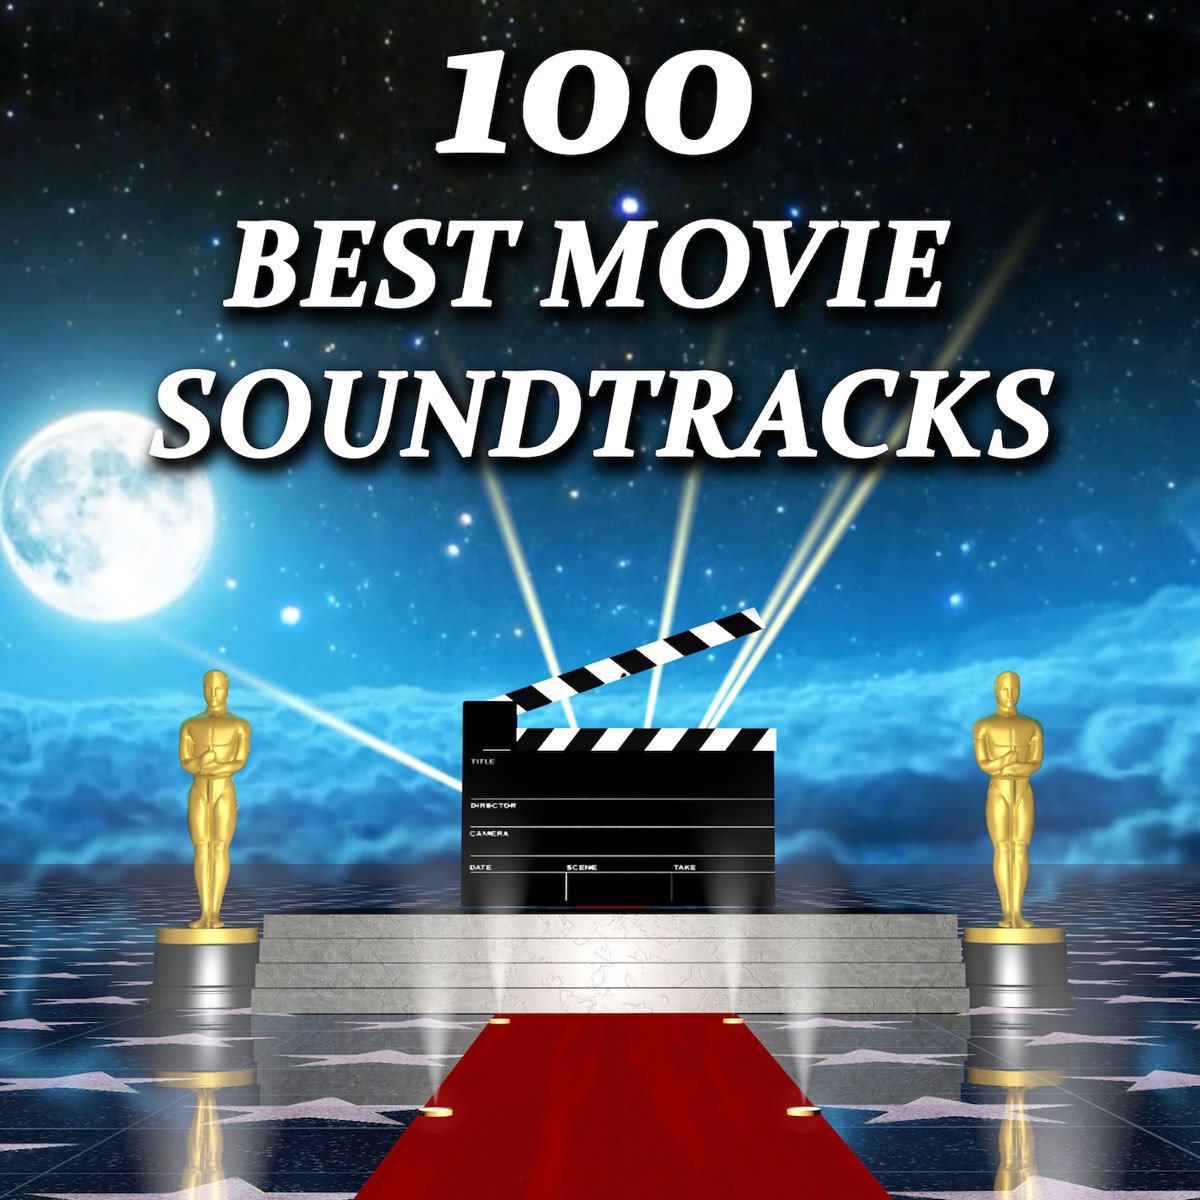 ‎100 Best Movie Soundtracks by M.S. on Apple Music